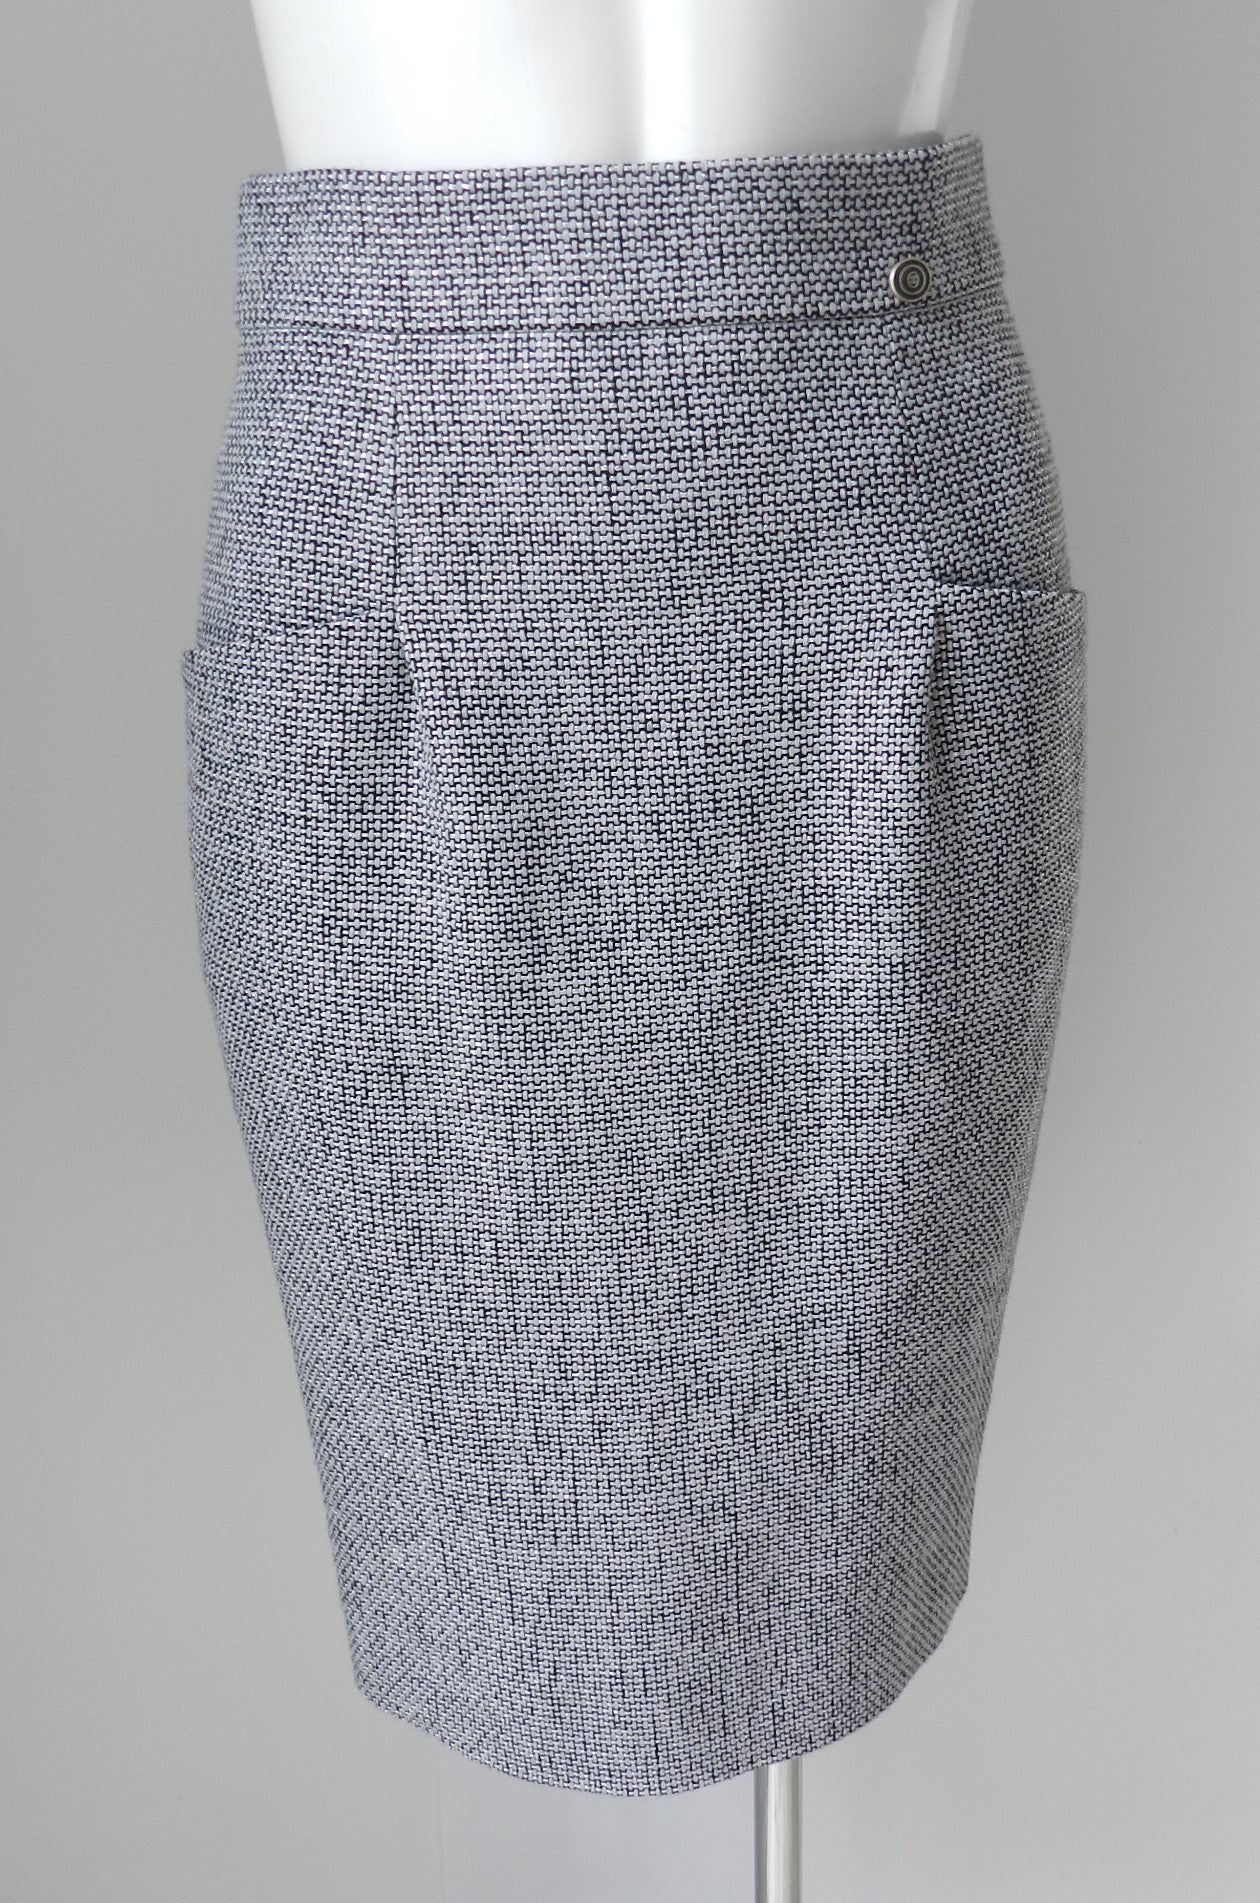 Women's Chanel Grey and Silver metallic tweed skirt suit